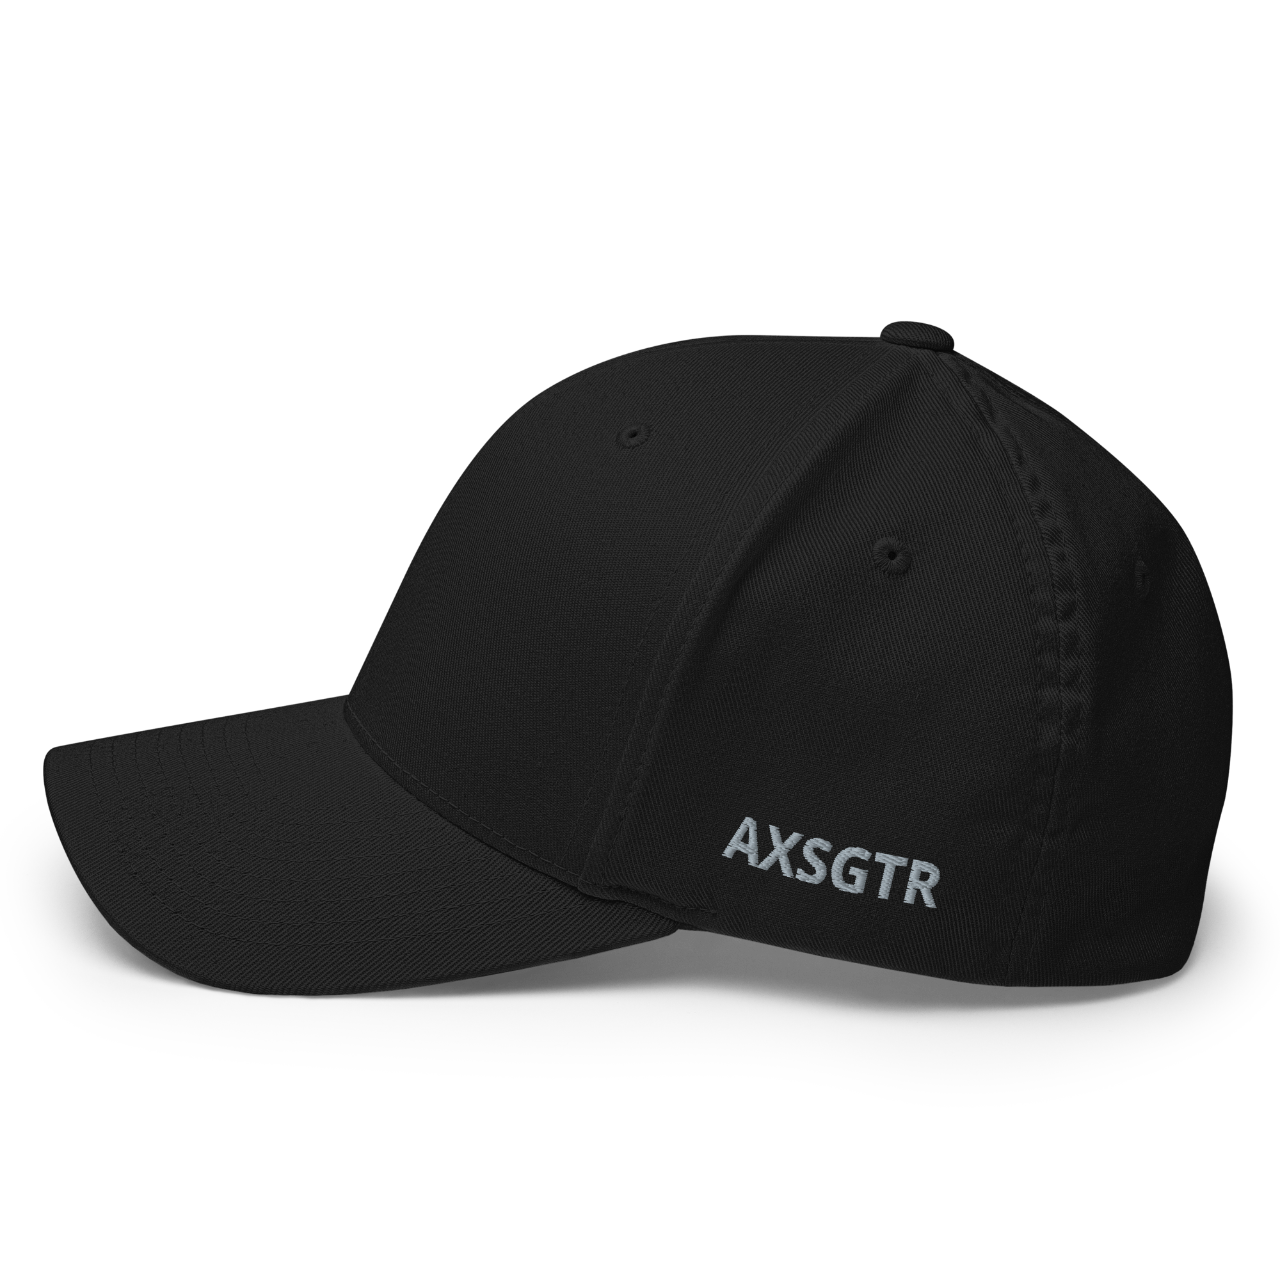 axsgtr axess electronics guitar music industry branded merchandise swag flexfit closed back baseball cap hat black grey